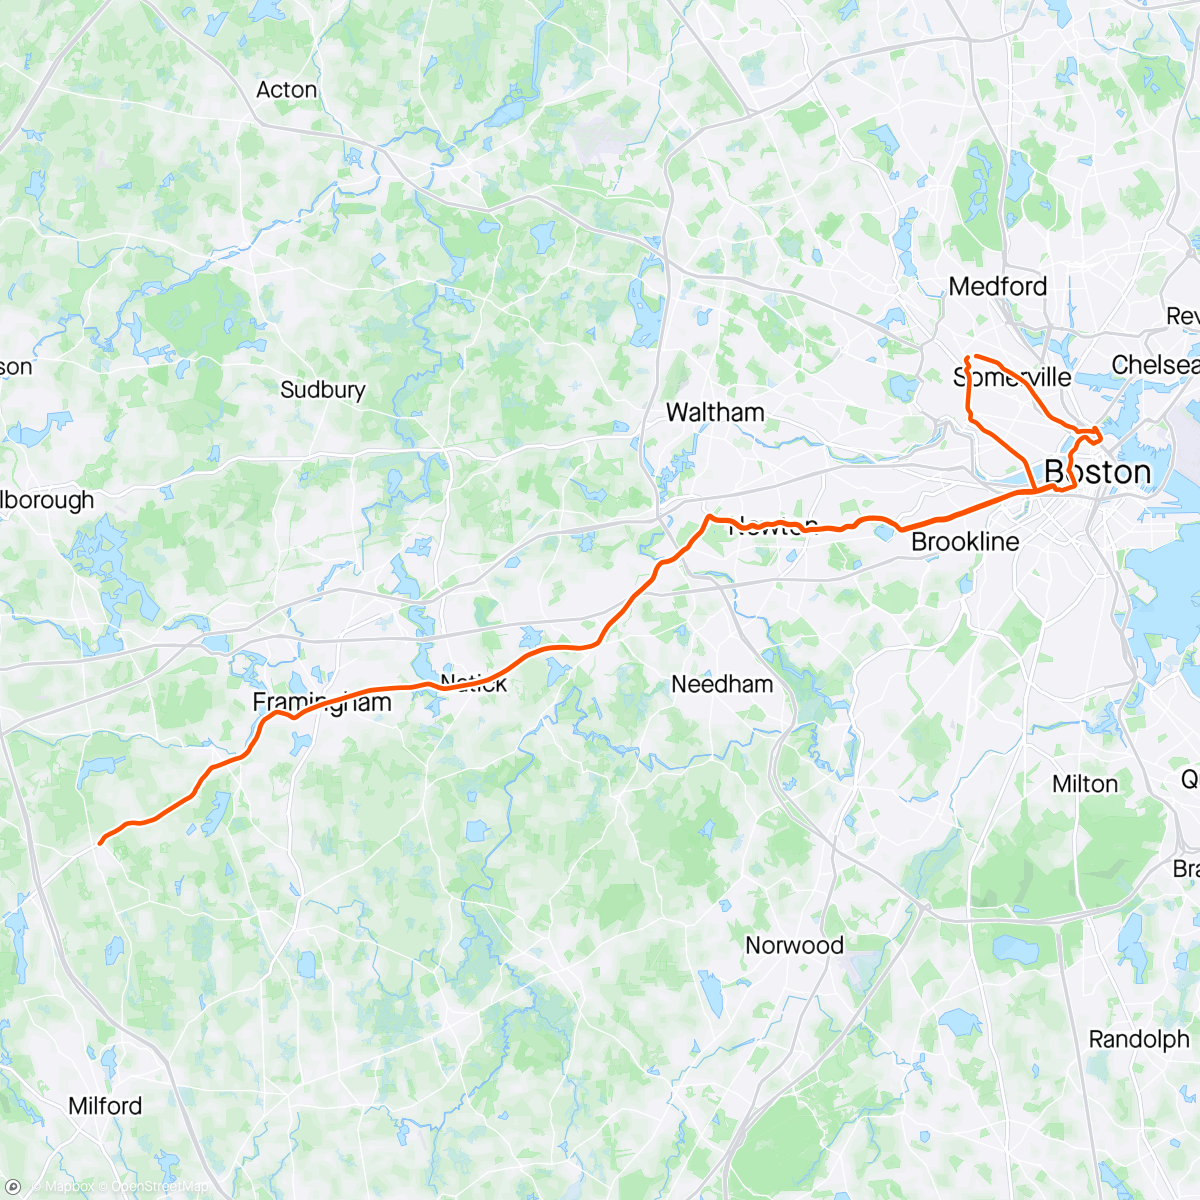 Map of the activity, Midnight Marathon ride, that was amazing.